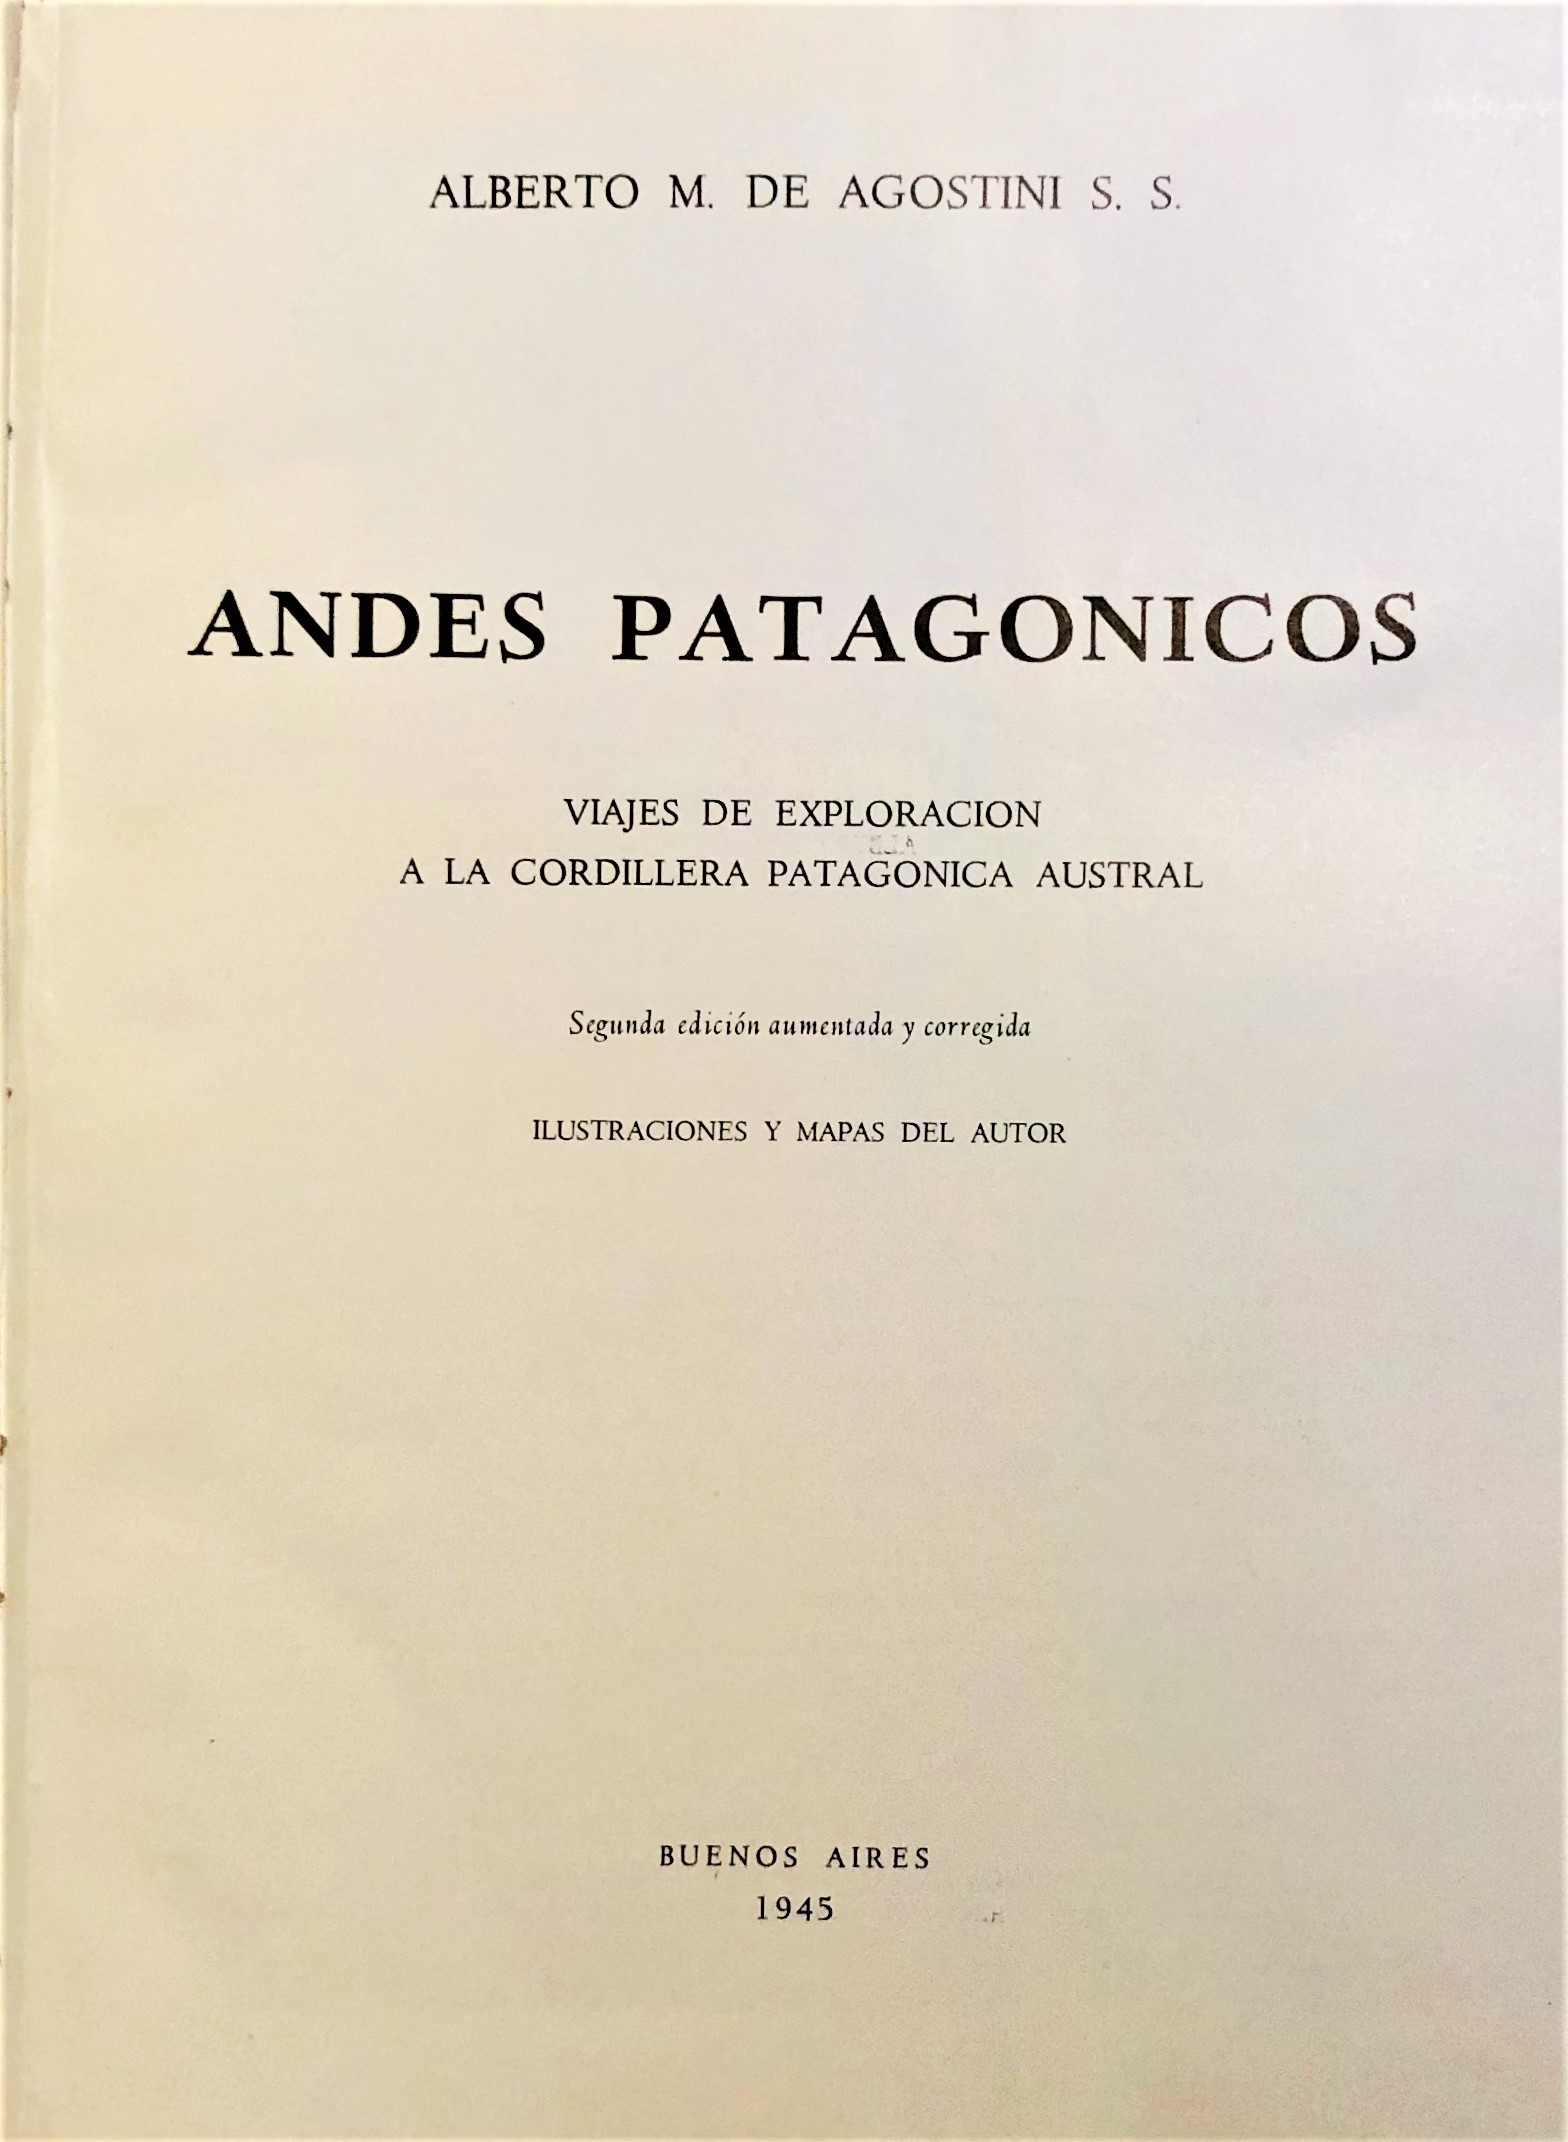 Alberto M. de Agostini - Andes Patagónicos